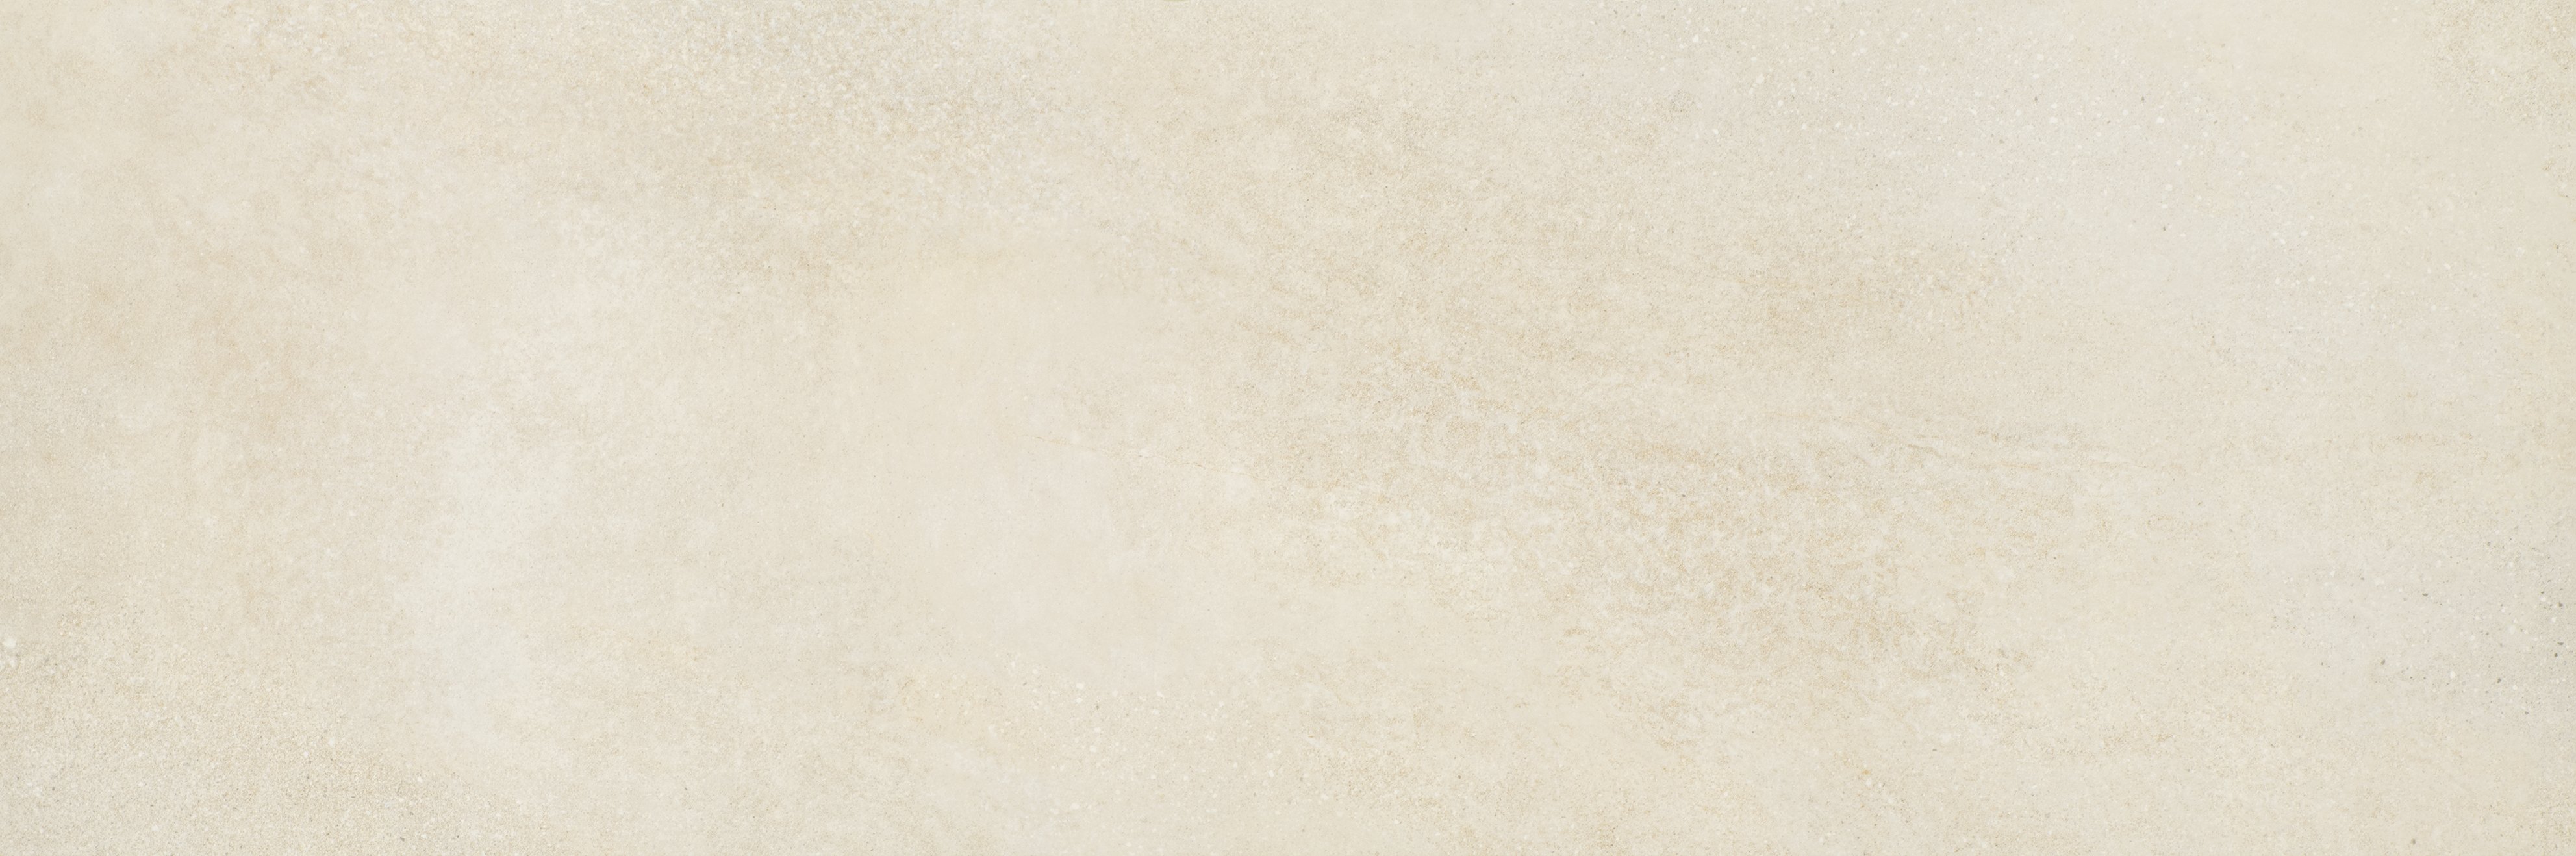 Mystic Shadows beige - obkládačka rektifikovaná 39,8x119,8 béžová 161101